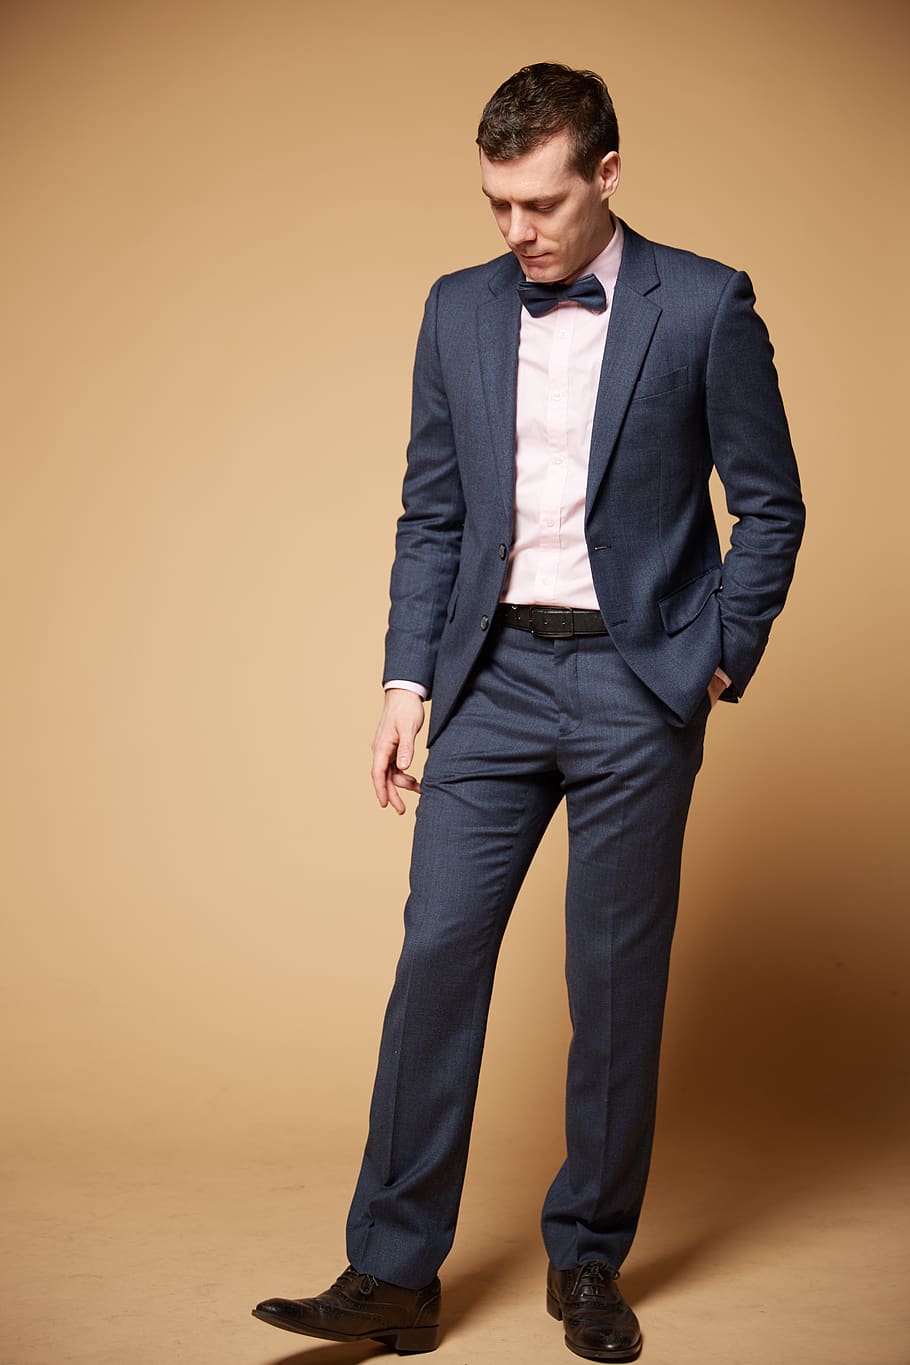 suit, bowtie, standing, man, gentleman, elegant, male, clothes, handsome, one person